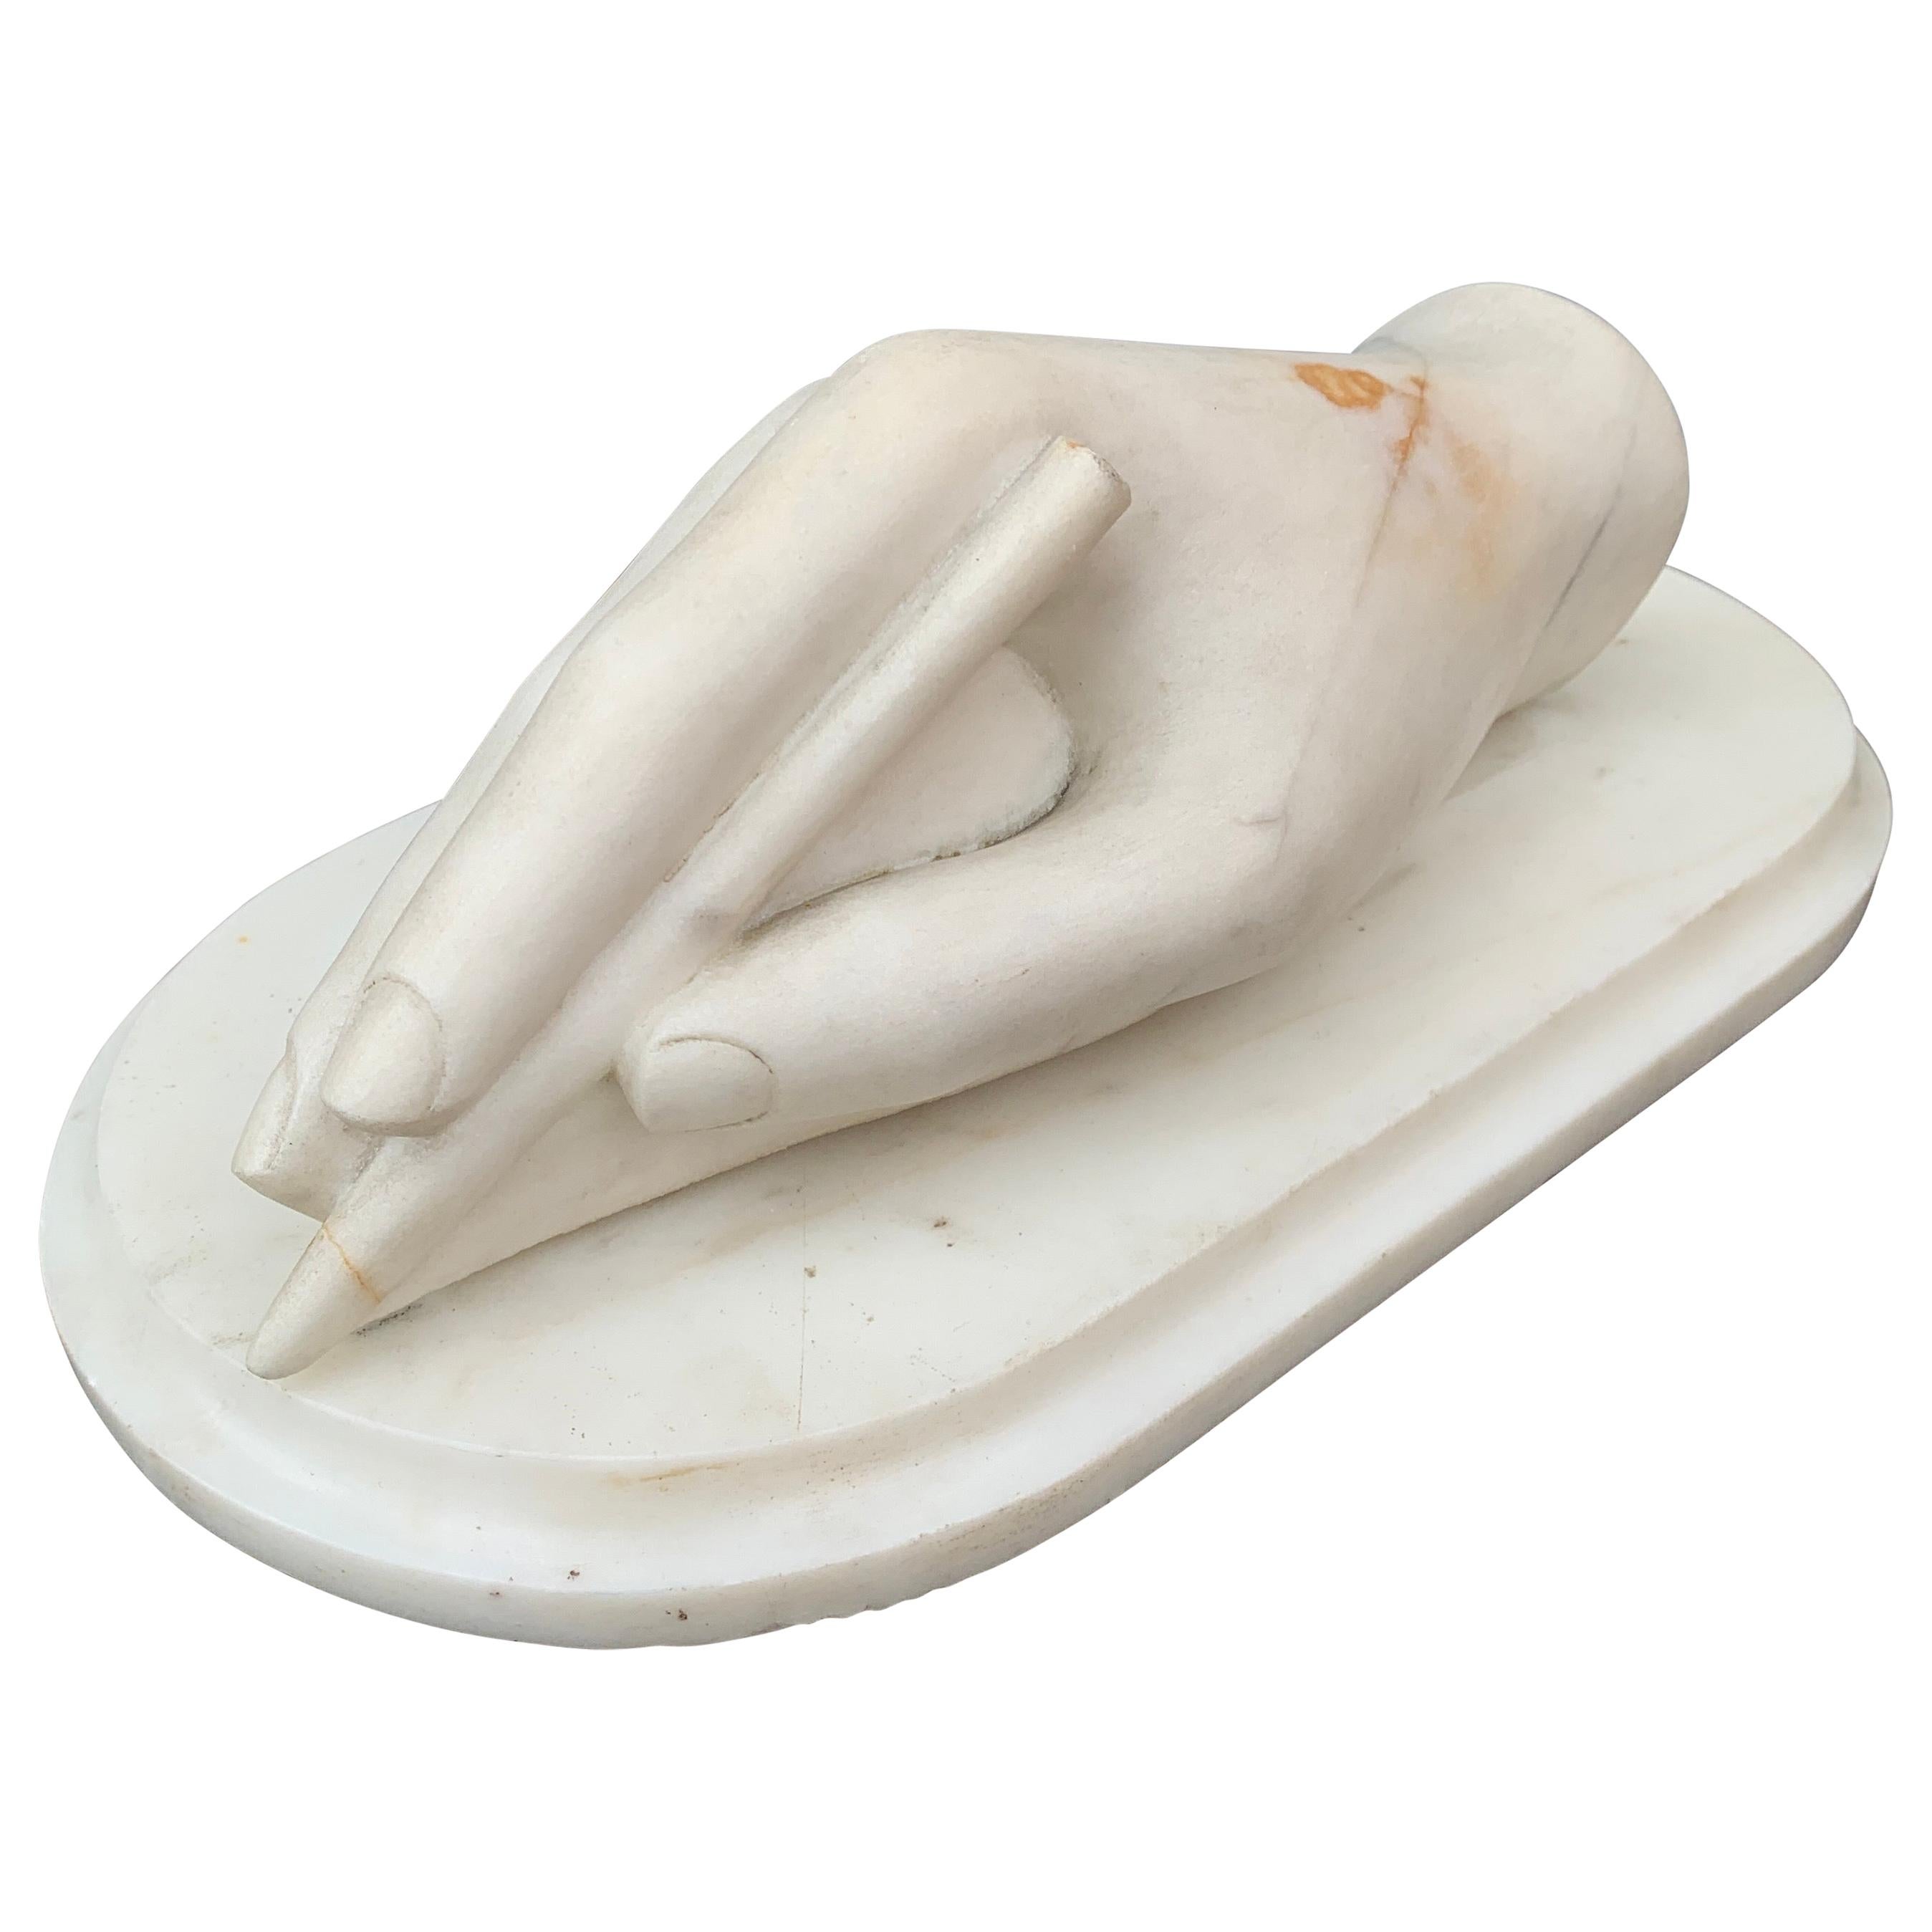 Italian Antonio Canova White Marble Hand Sculpture, Early 19th Century